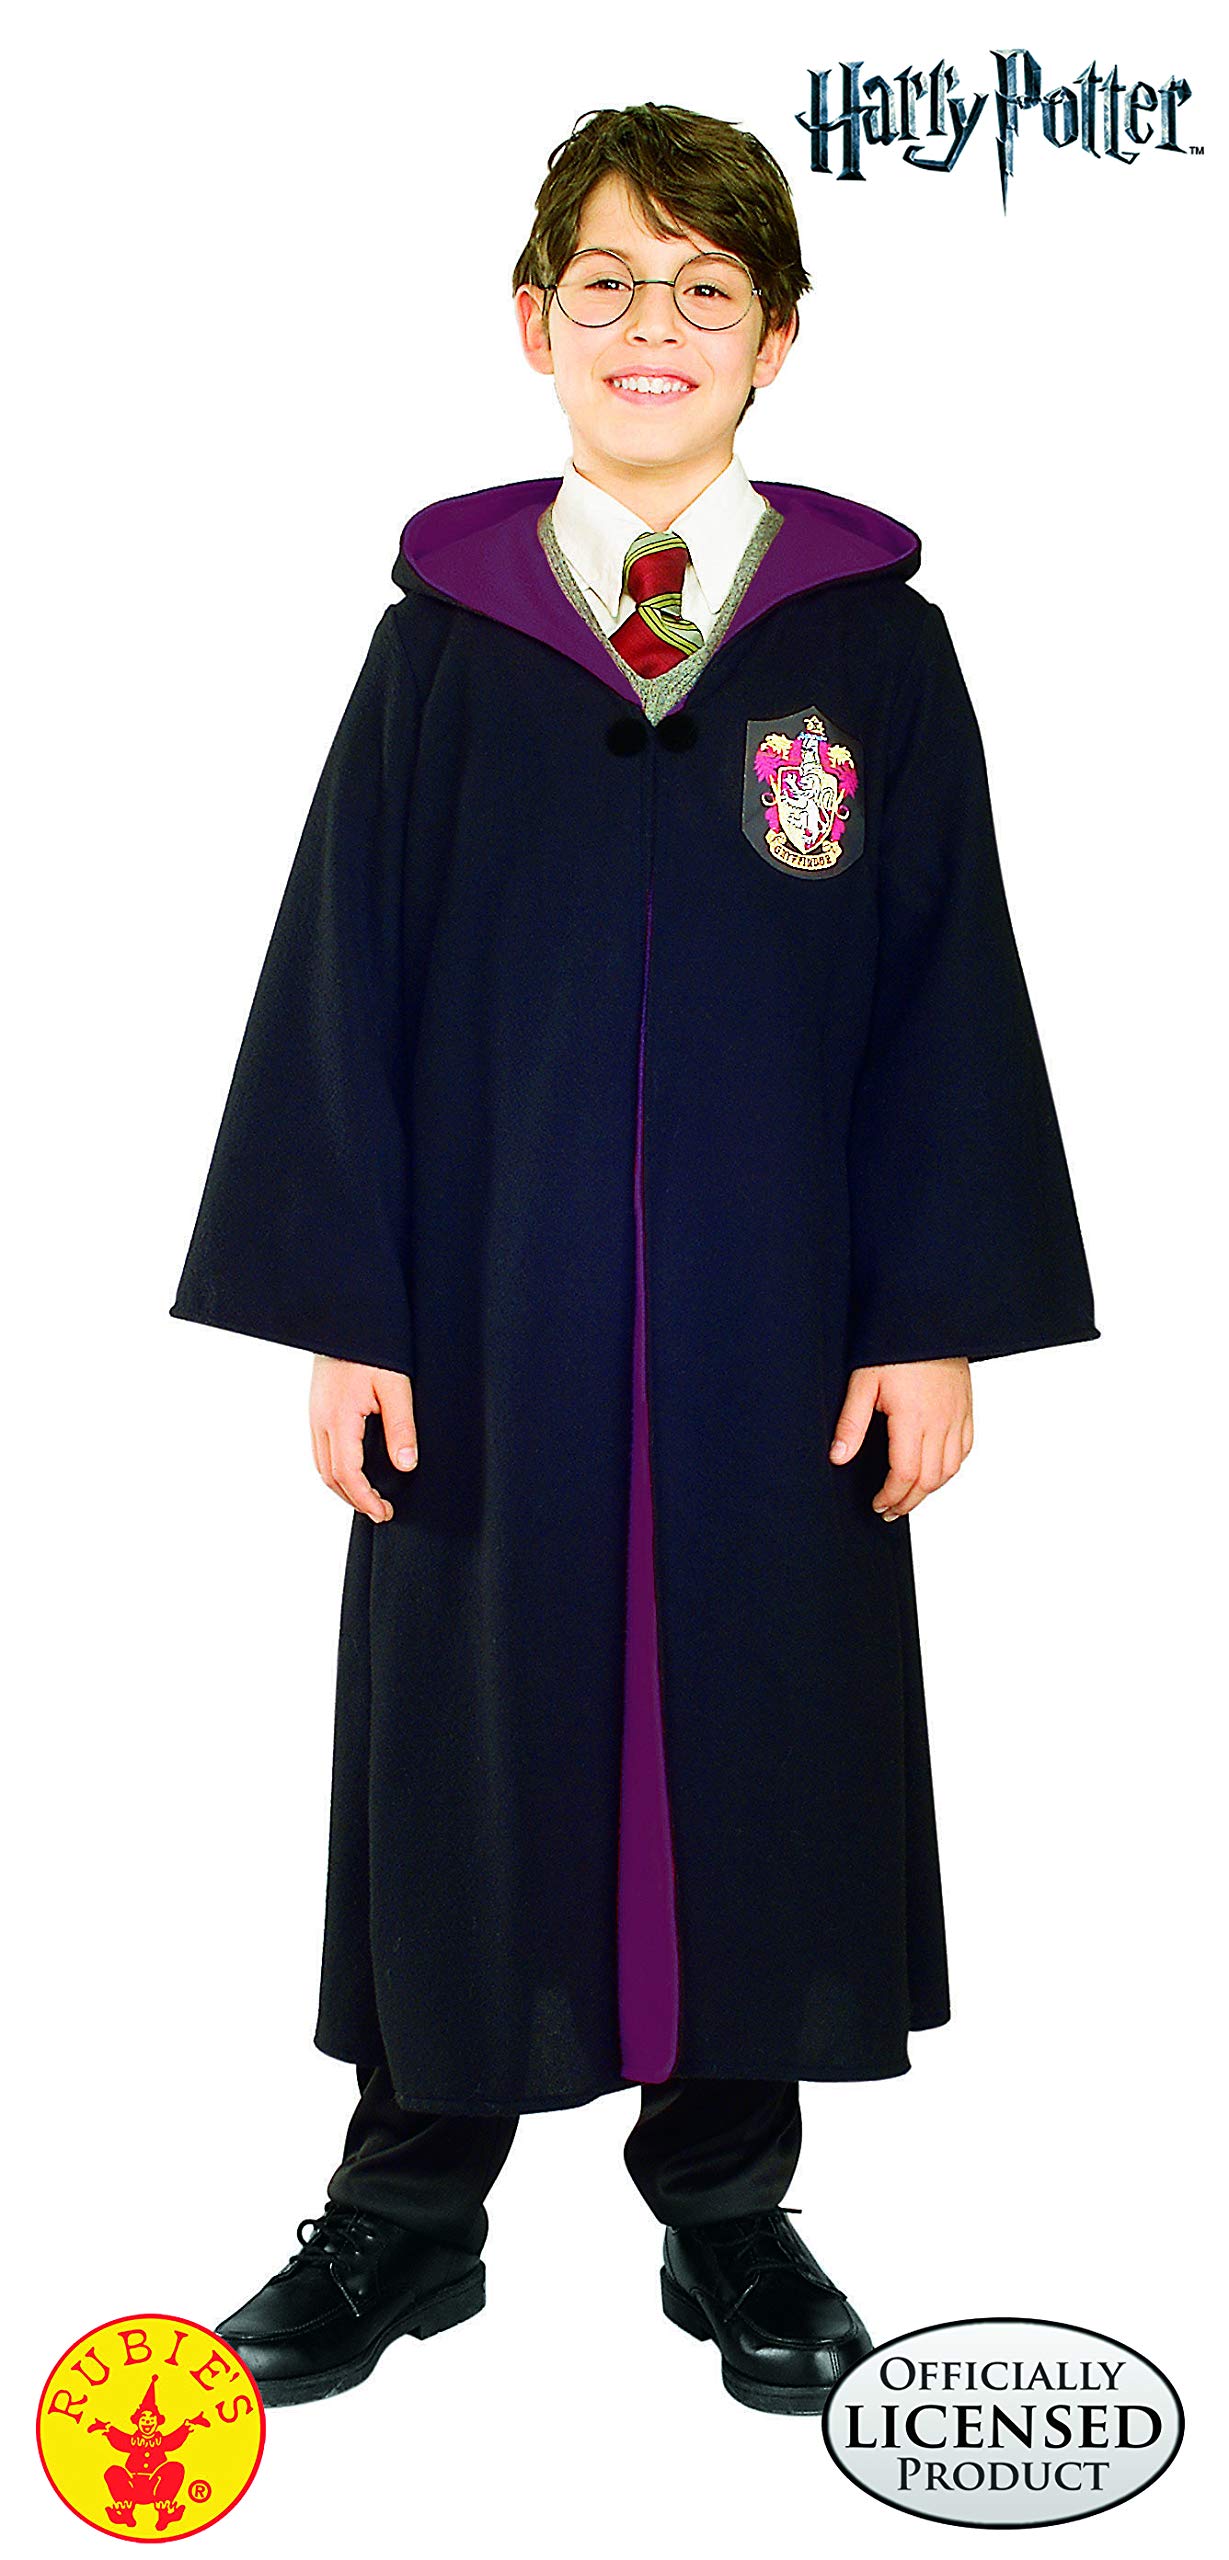 Rubie's Deluxe Harry Potter Costume